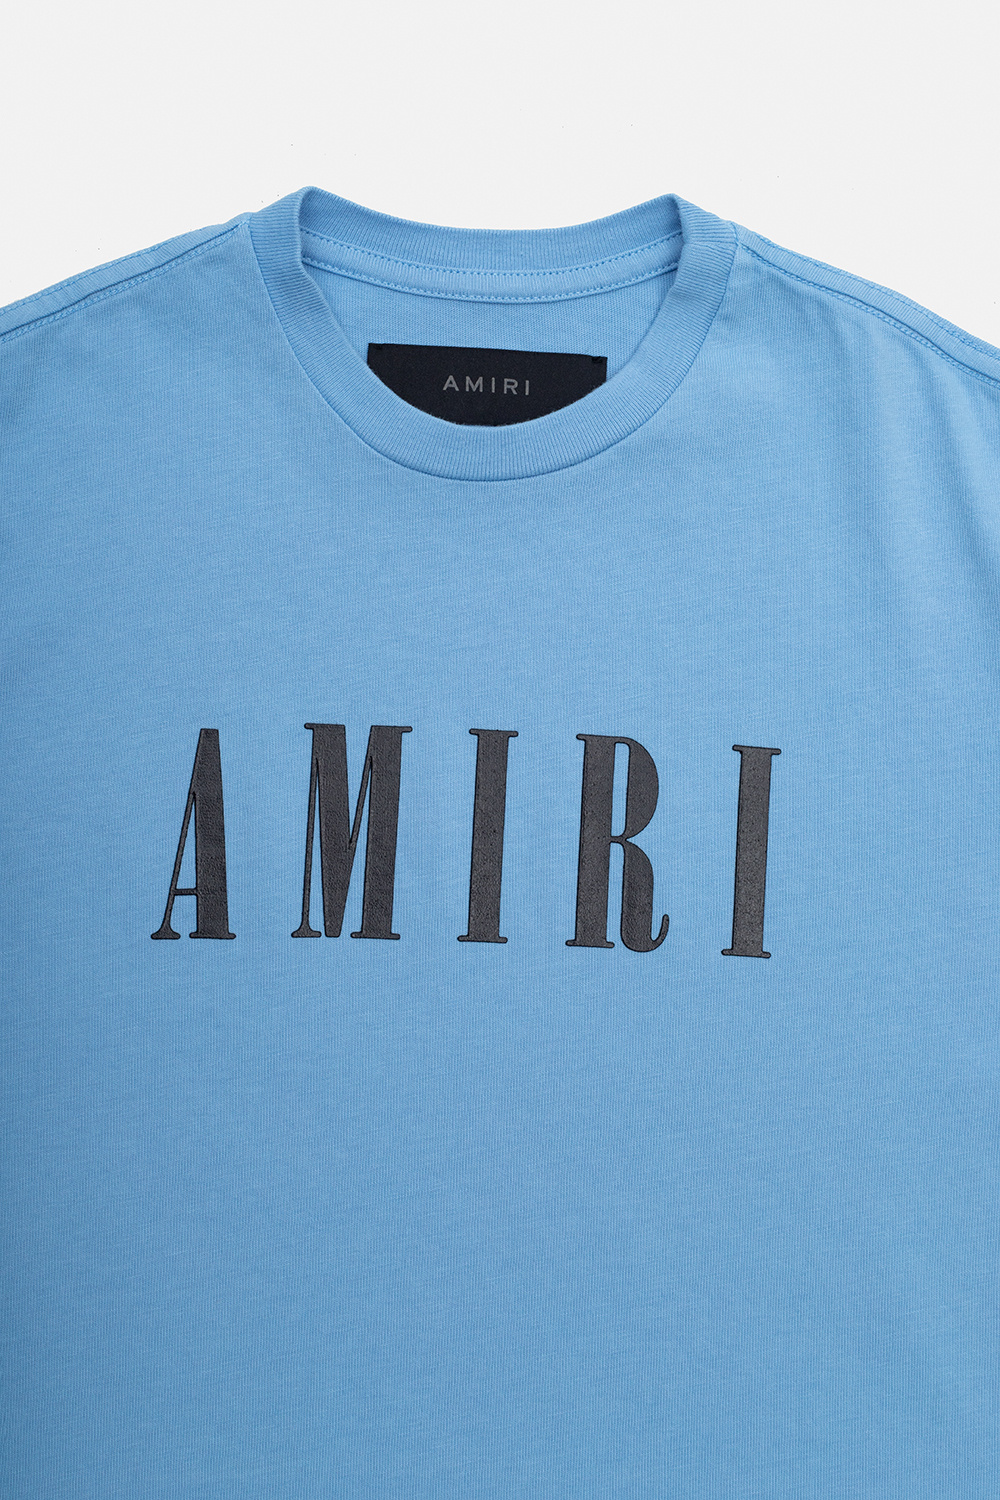 Amiri Kids clothing box office-accessories eyewear T Shirts Pink 44